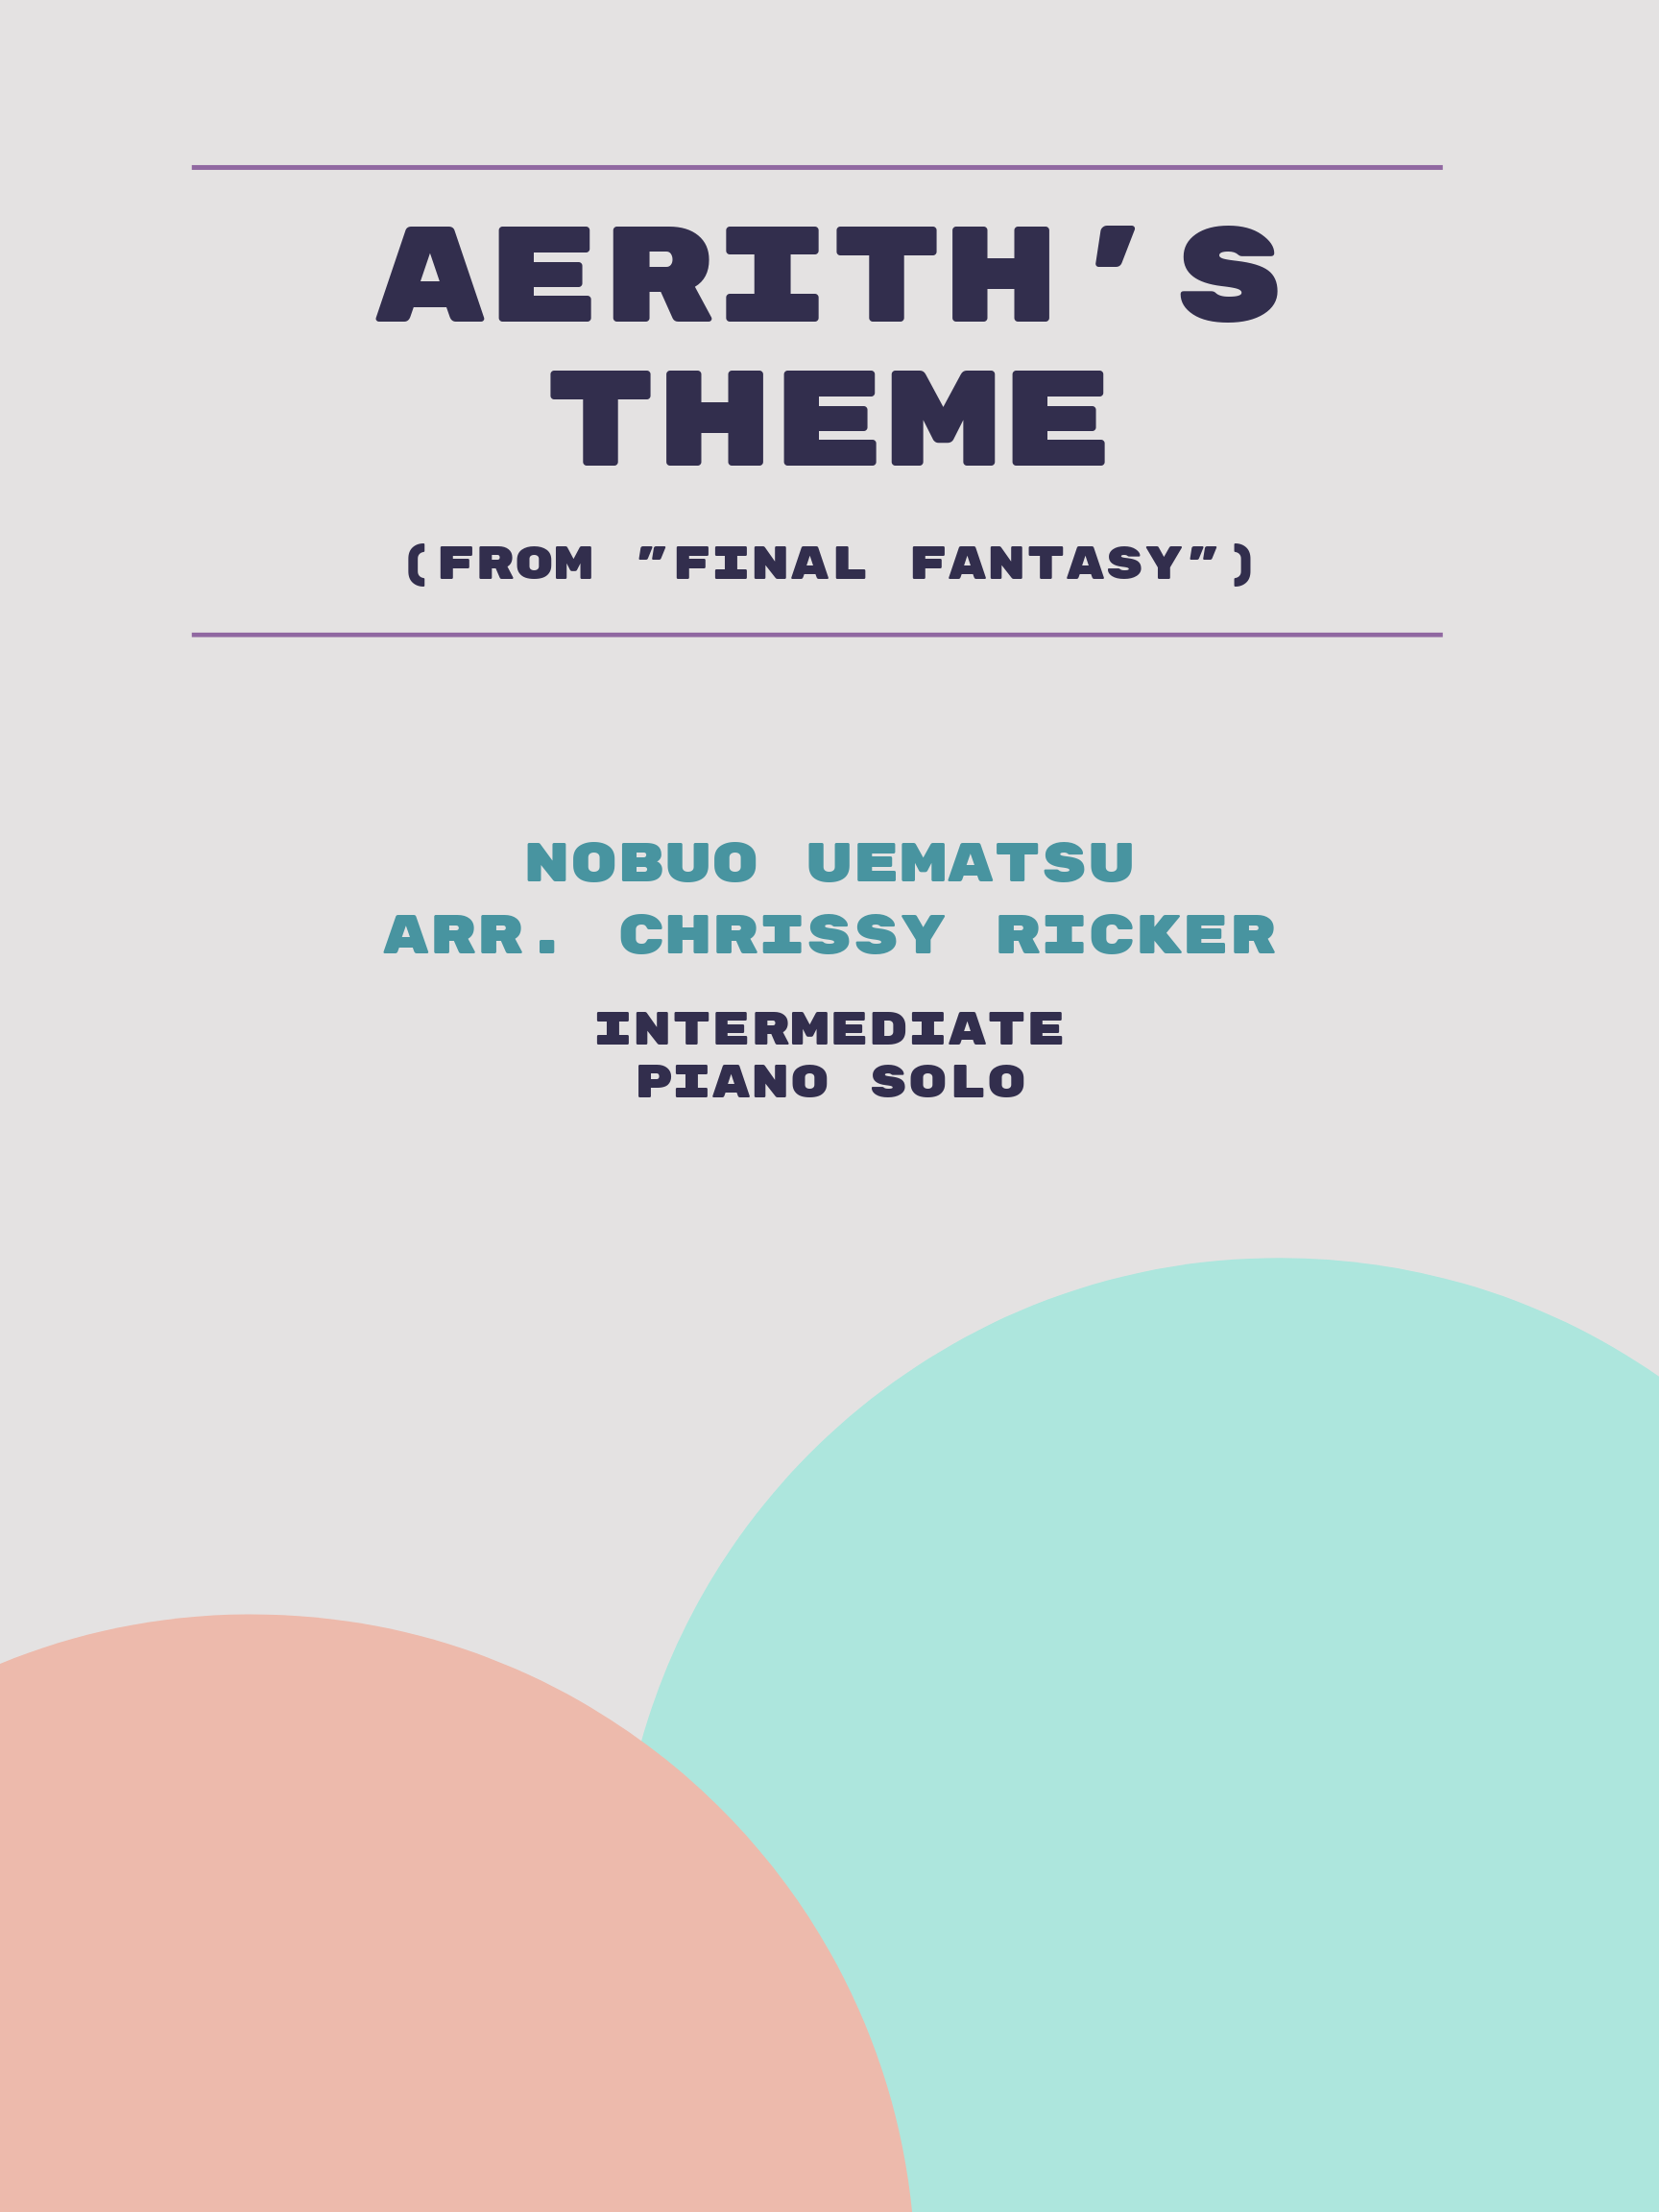 Aerith's Theme by Nobuo Uematsu